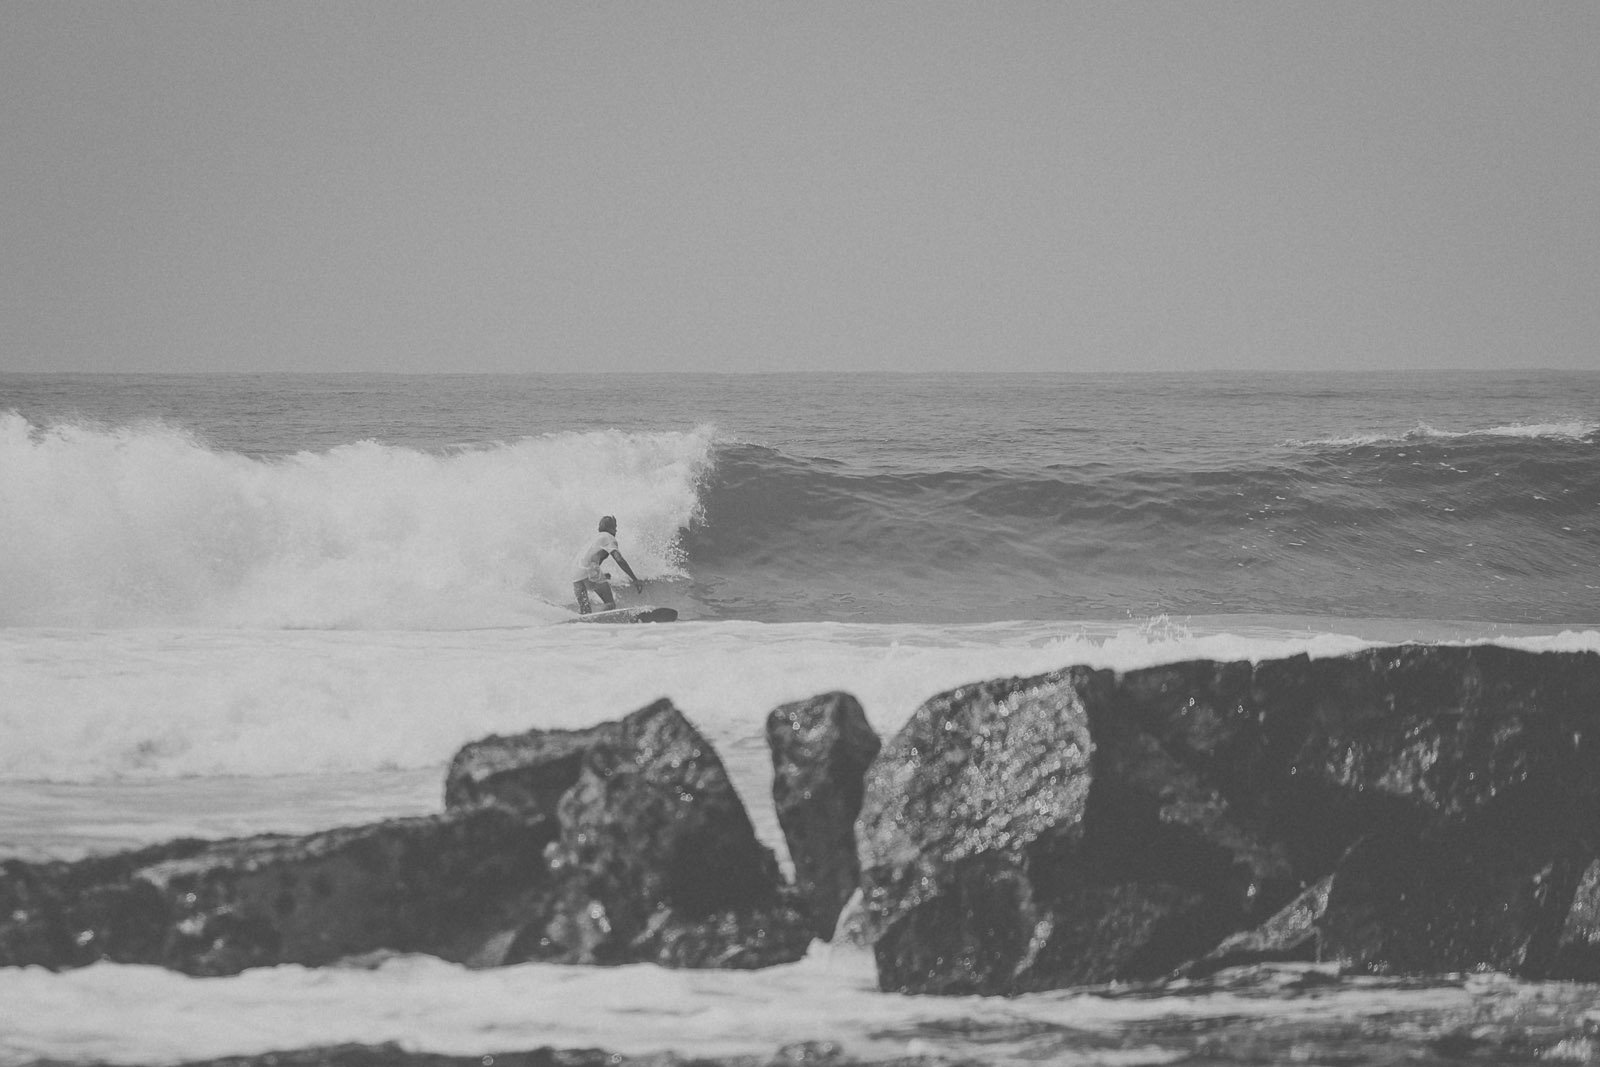 Sri Lanka-Lazy Left-Rams-Midigama-Surfing-Surf-Wave-Pointbreak-Longboard-Sunshinestories-IMG_4356